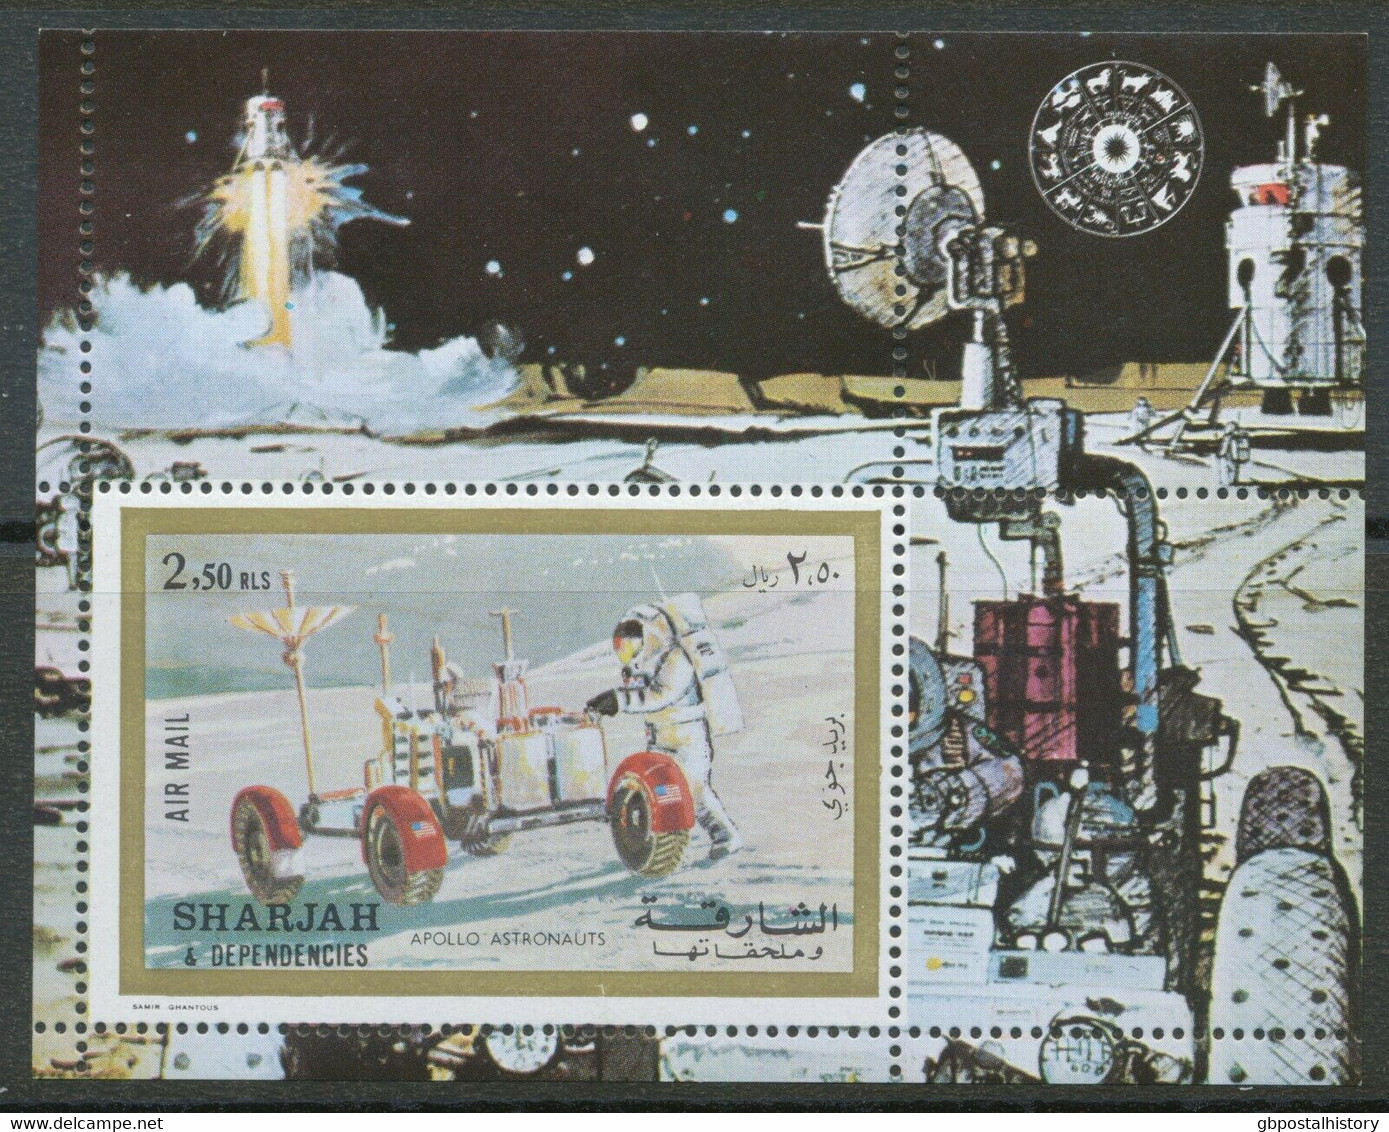 SJARJAH 1972 Apollo 17 Superb U/M + Canceled MS, MULTIPLE VARIETIES MISSING GOLD - Sharjah